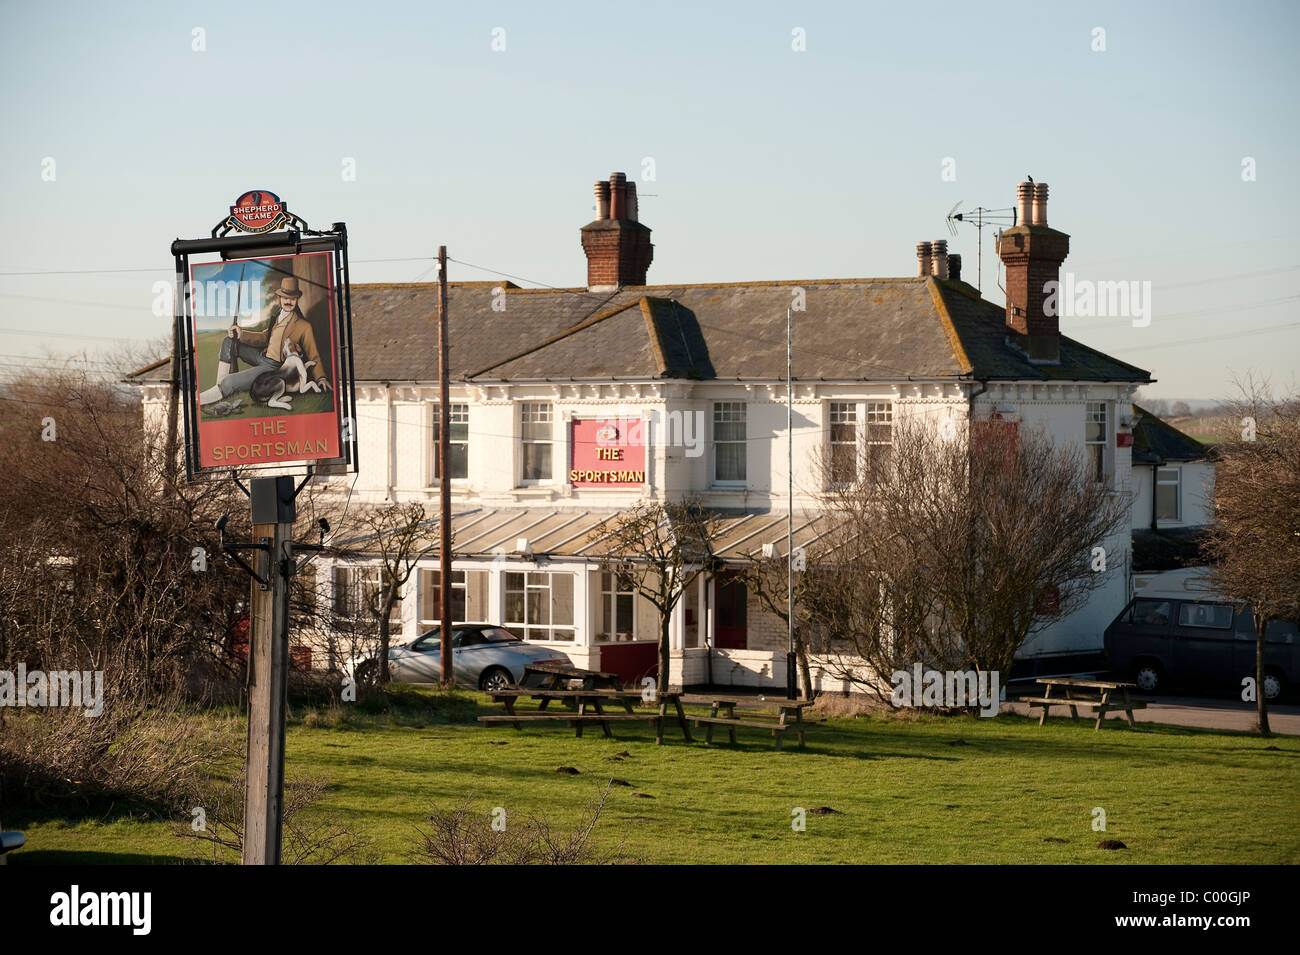 Le pub sportif sealter gastropub Michelin star restaurant Whitstable Kent UK Banque D'Images